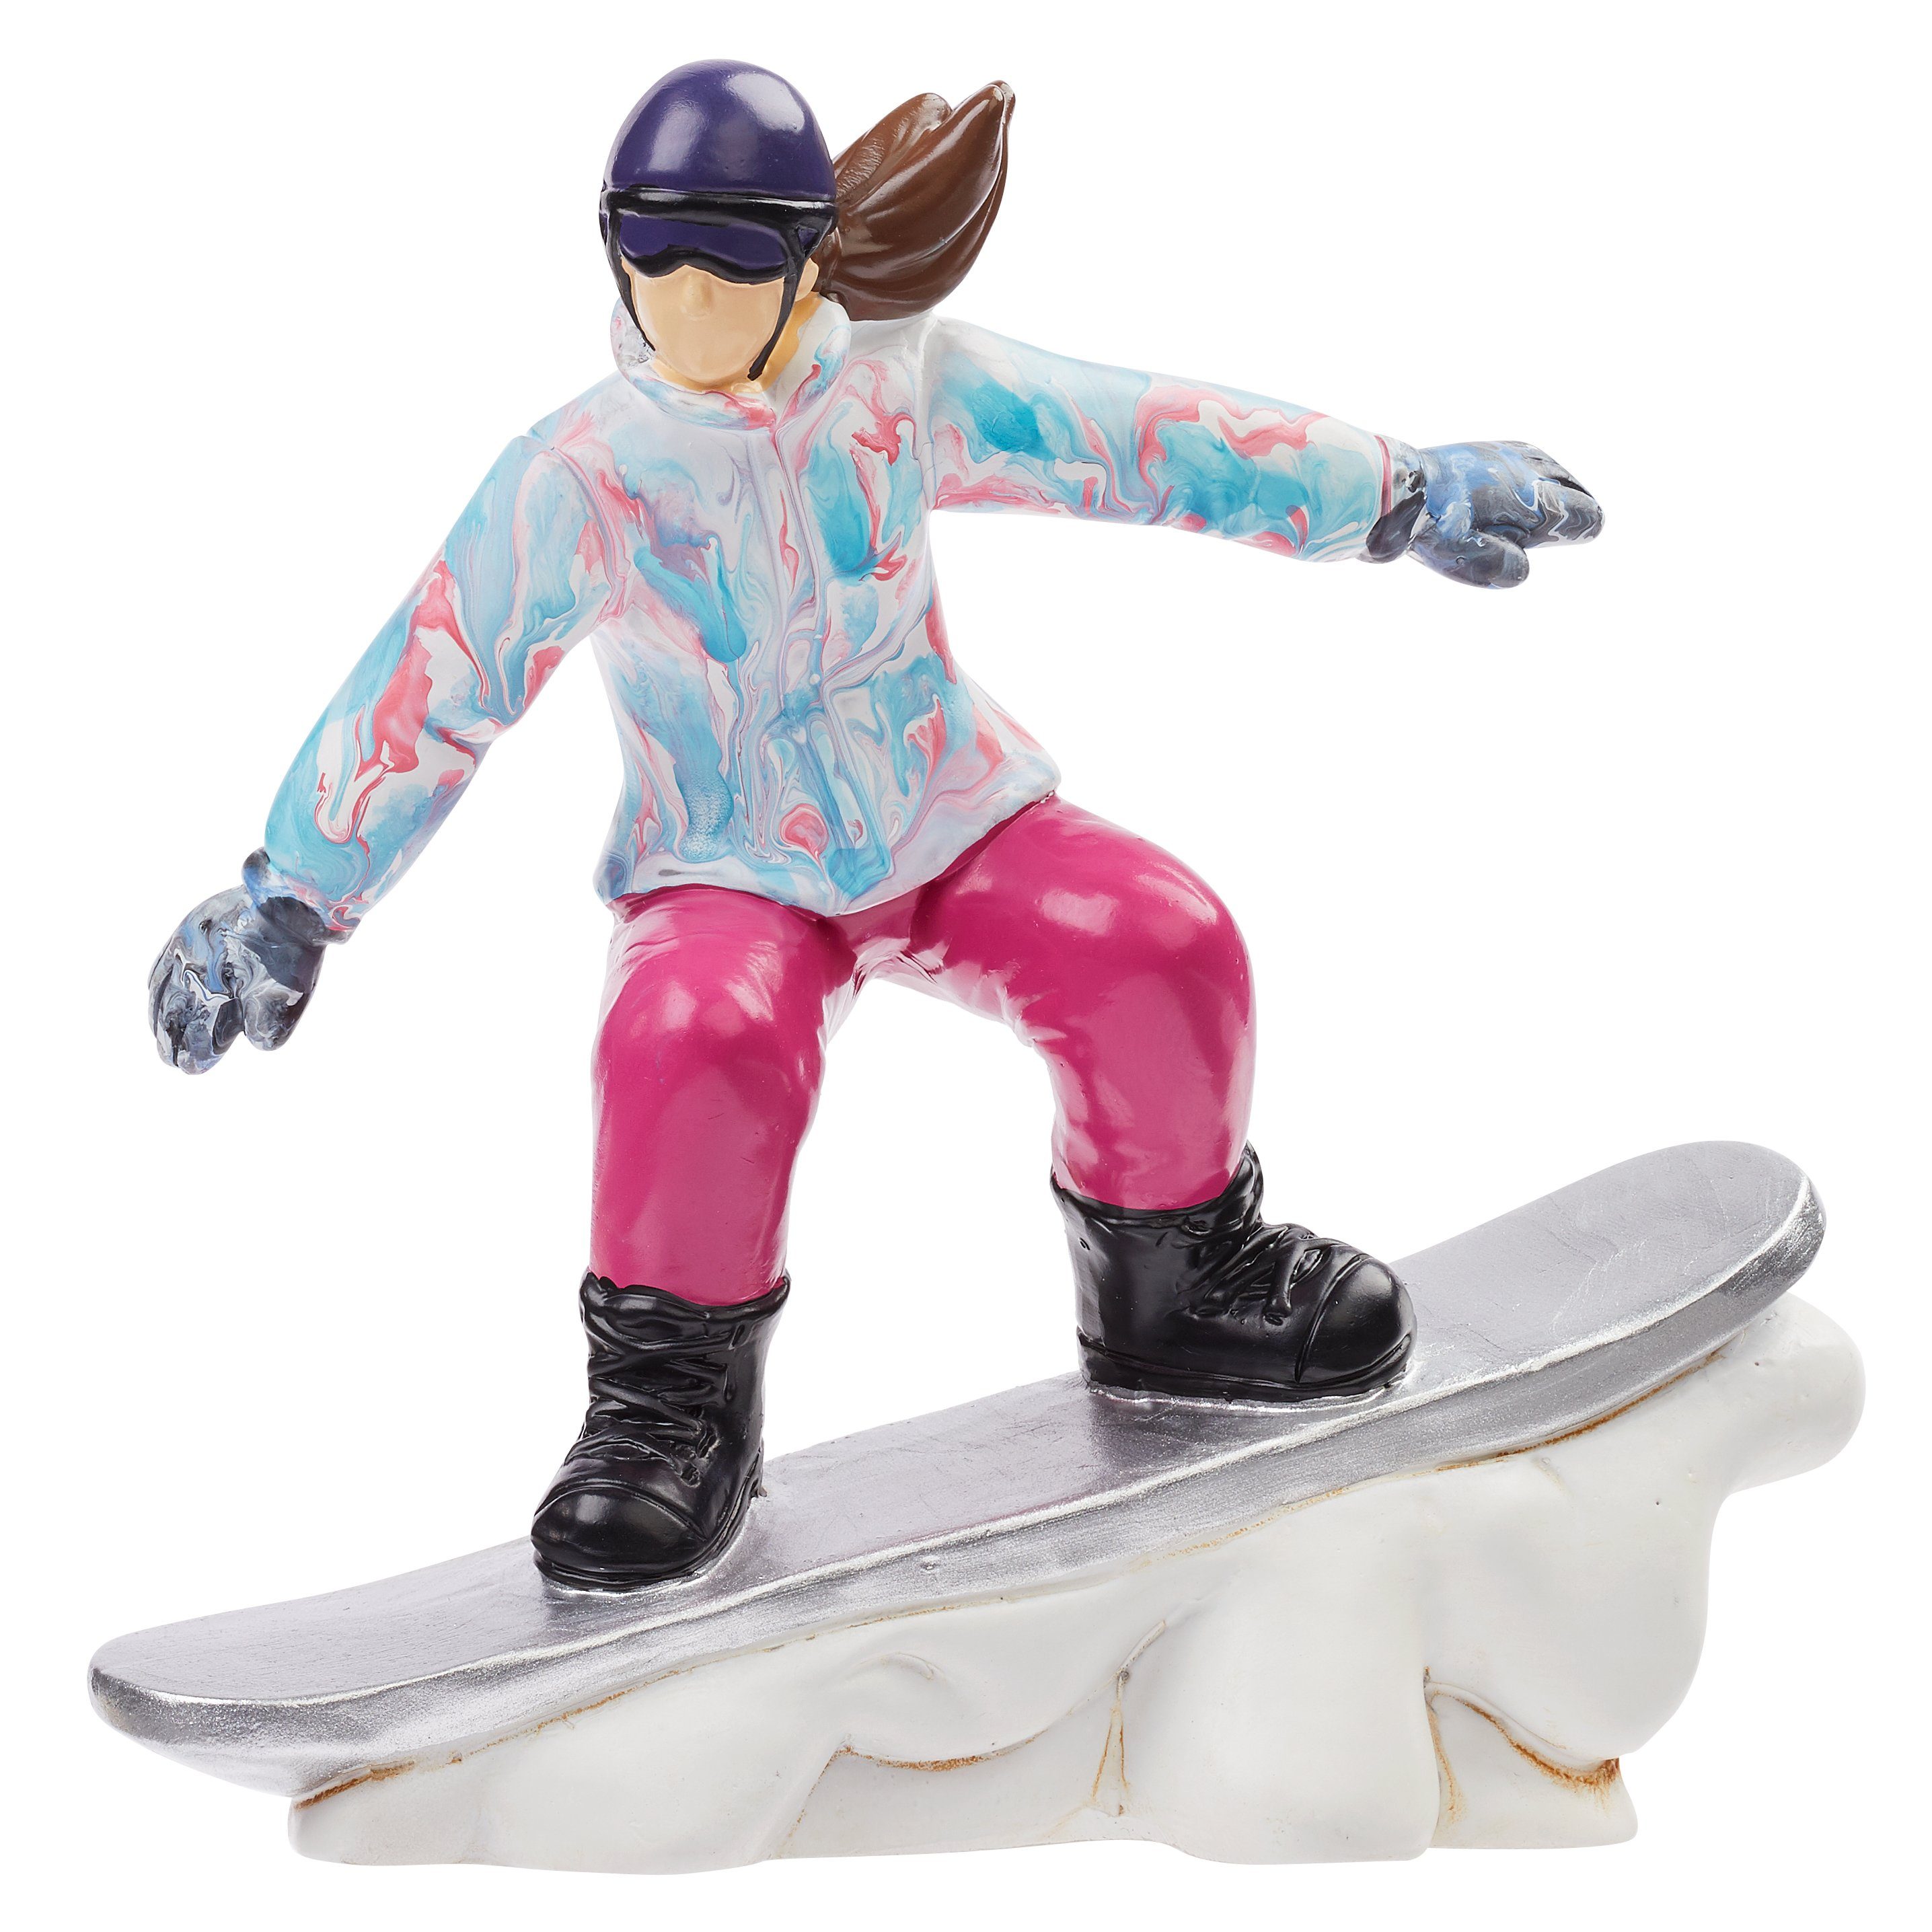 HobbyFun Dekofigur Snowboarderin, 9,5 cm